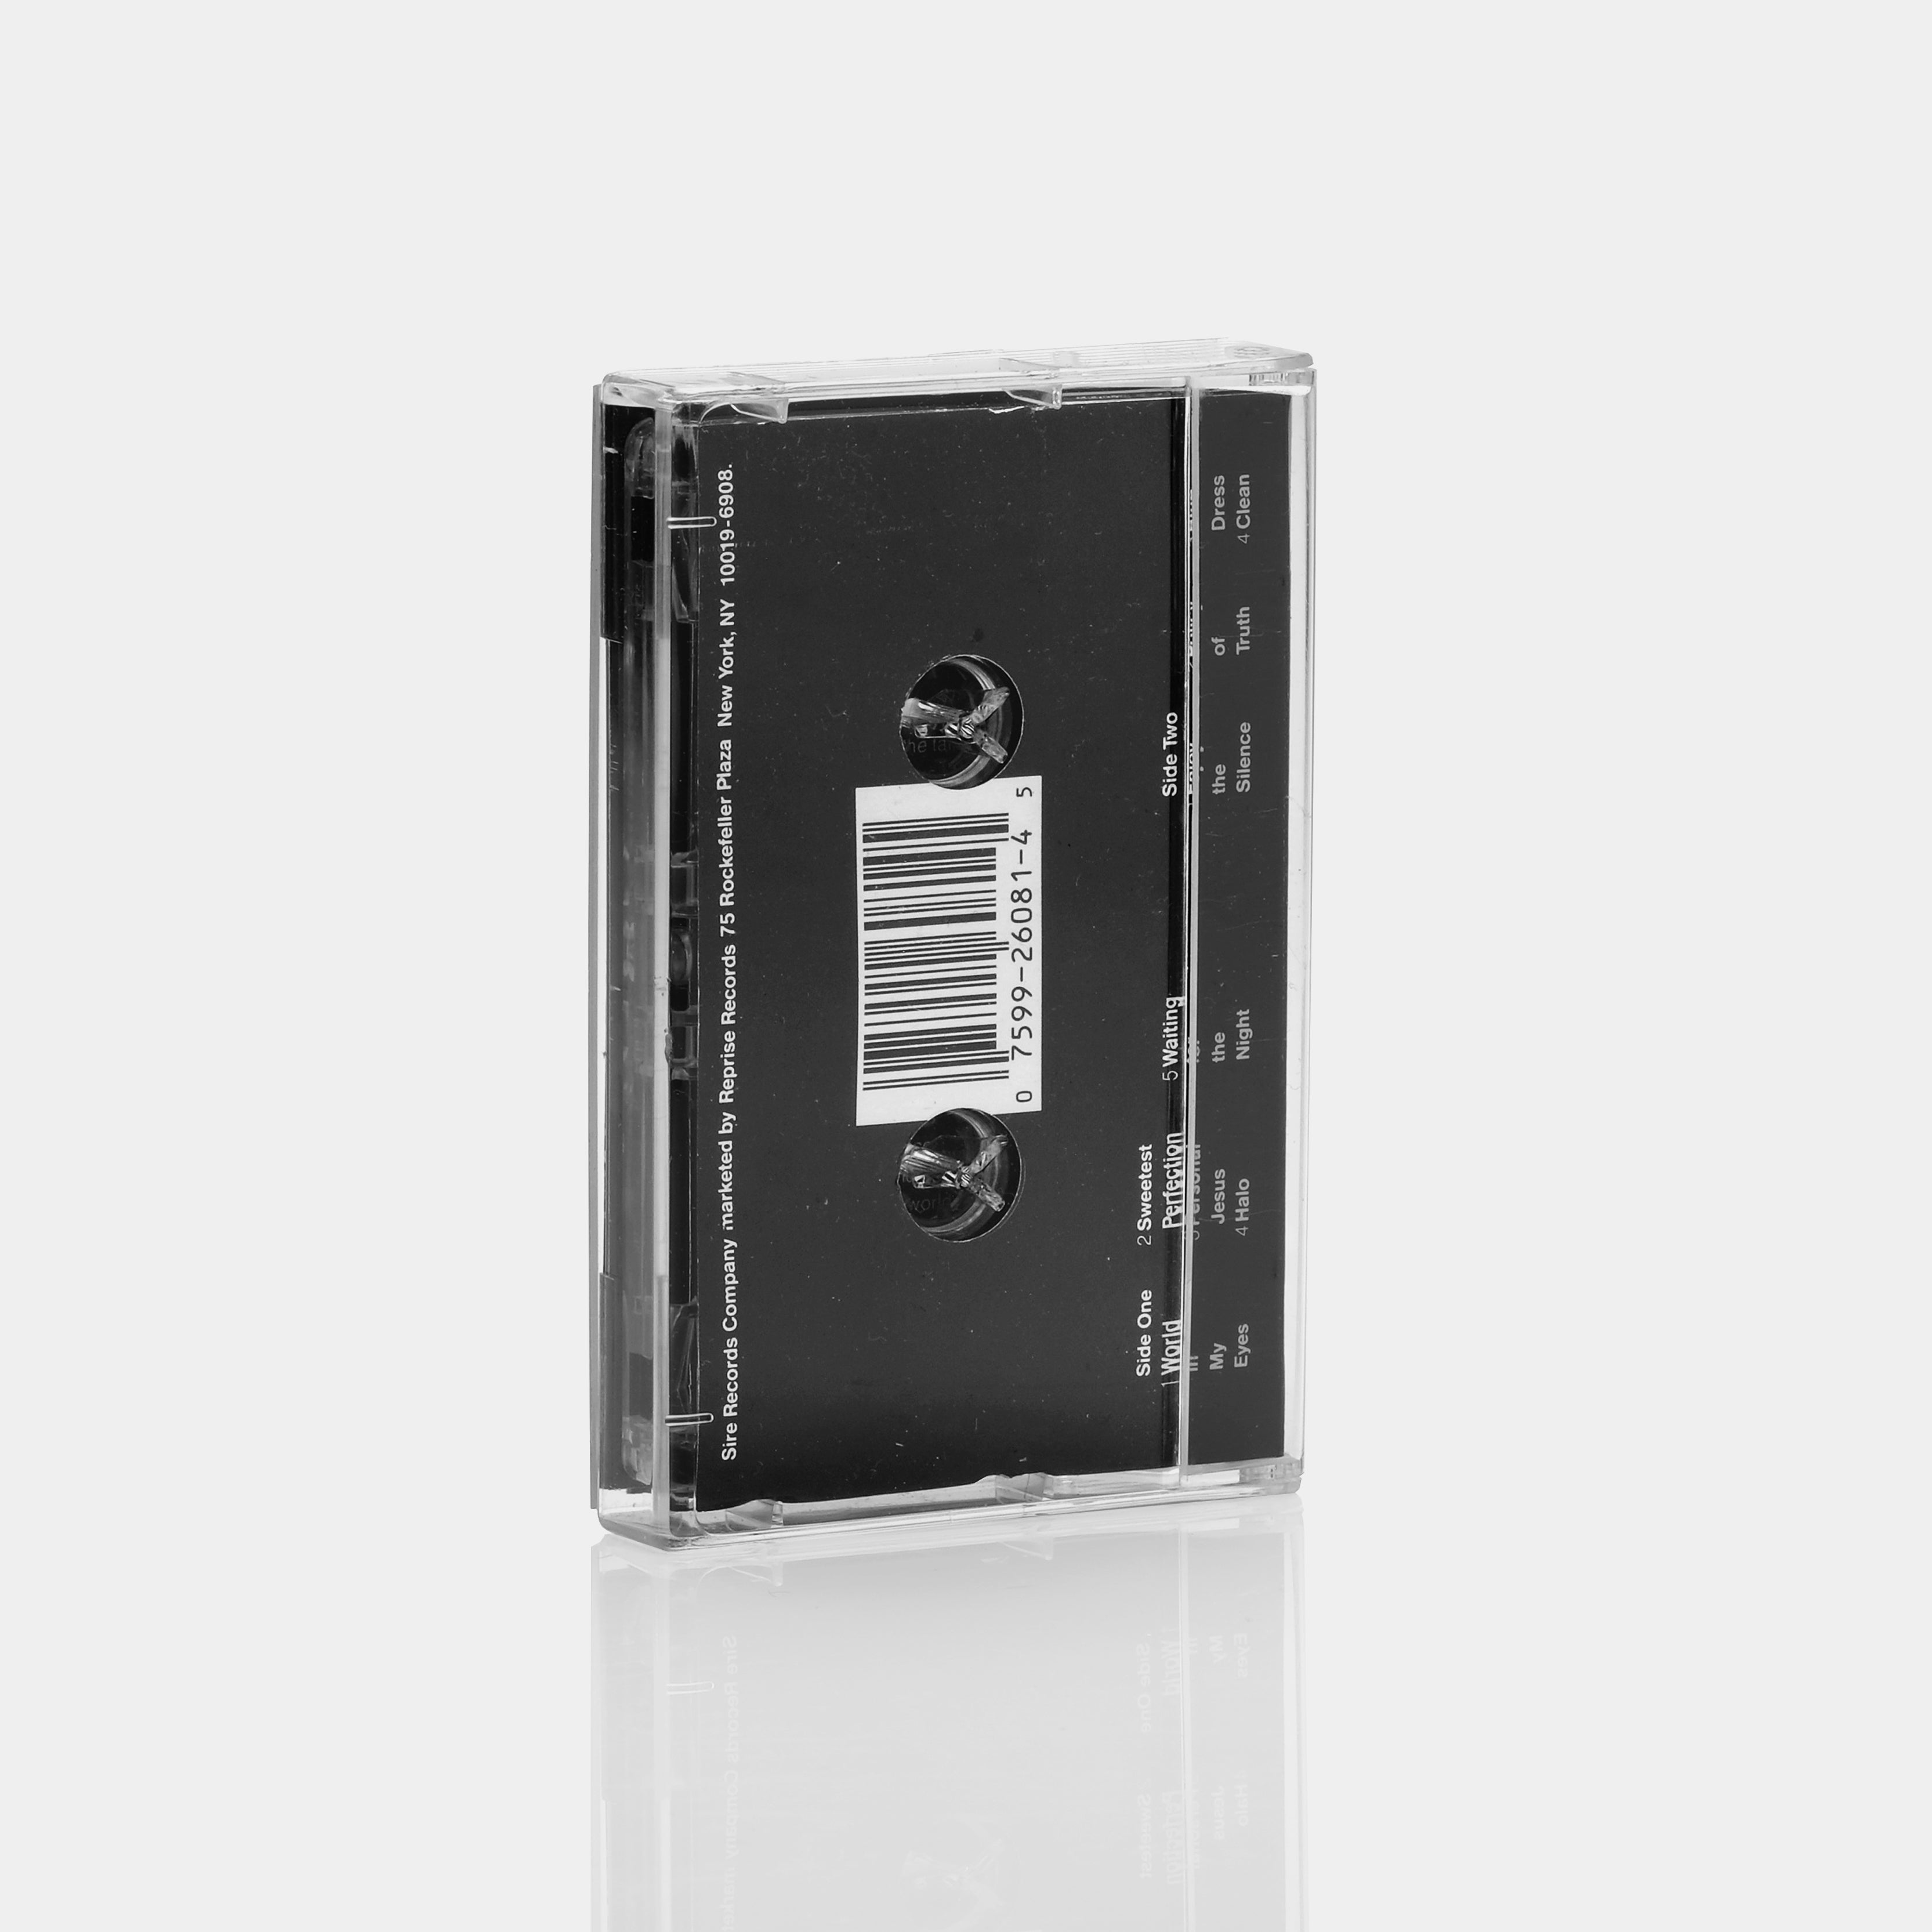 Depeche Mode - Violator Cassette Tape